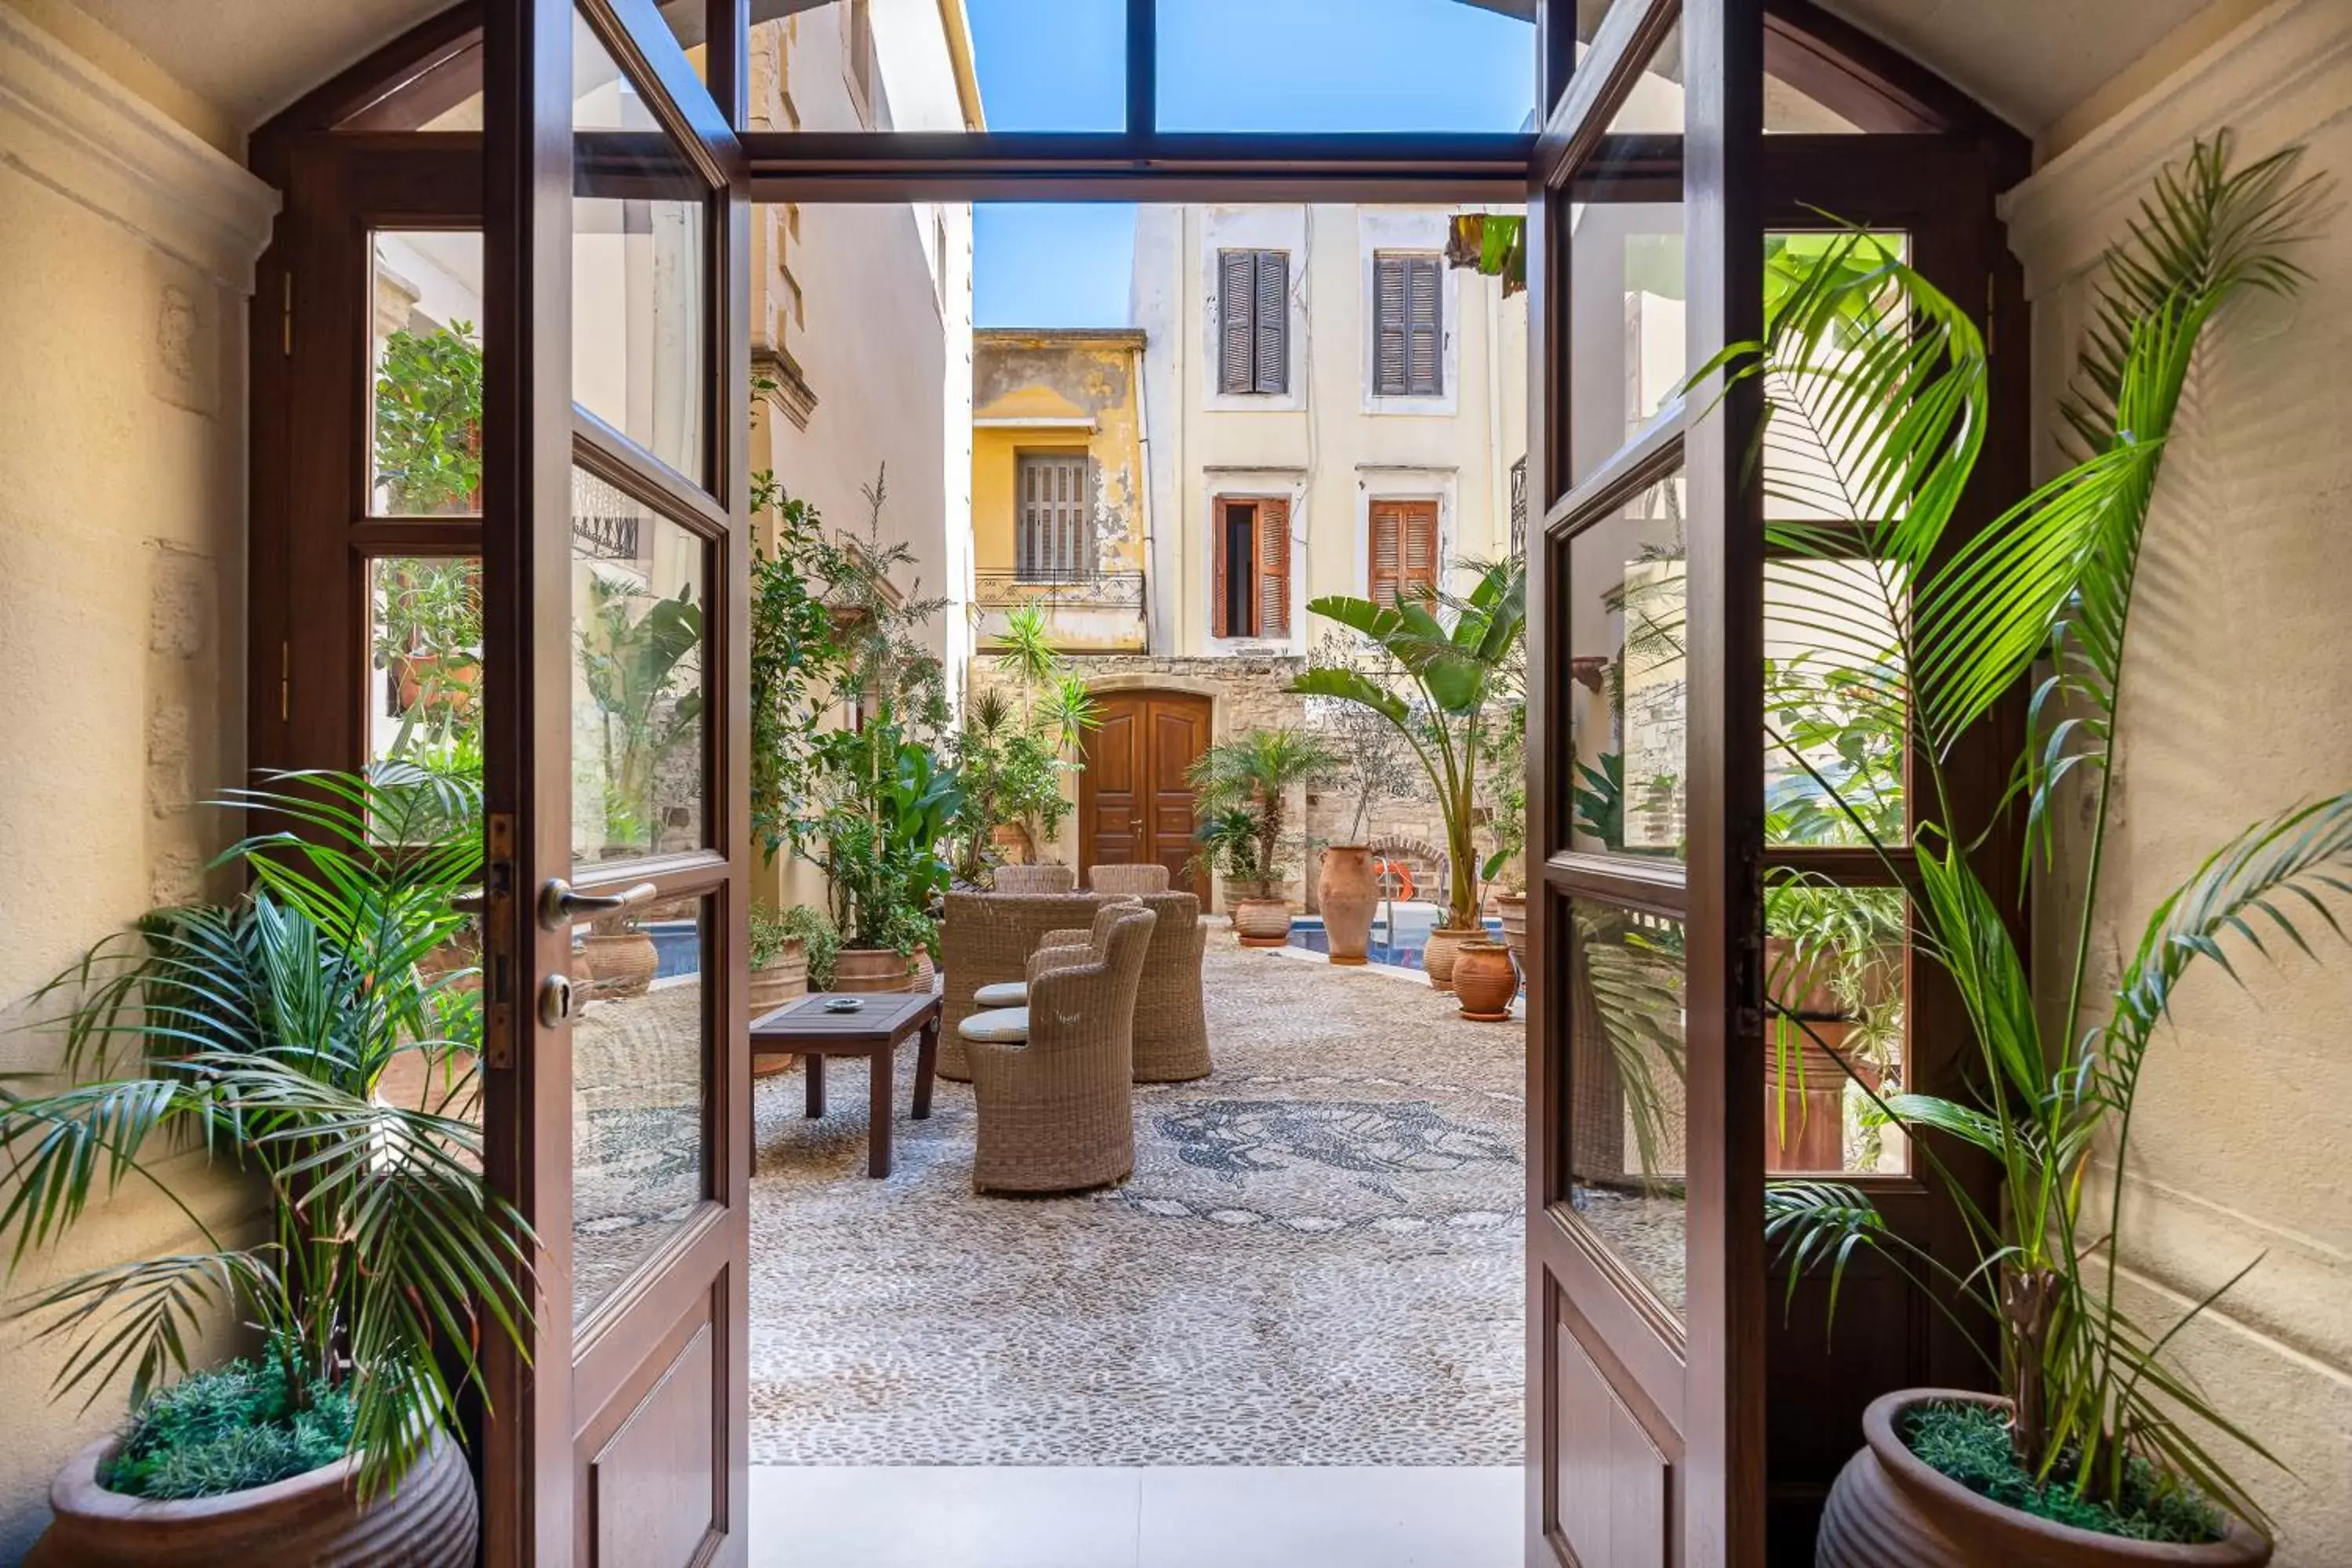 Inner courtyard view in Palazzino Di Corina